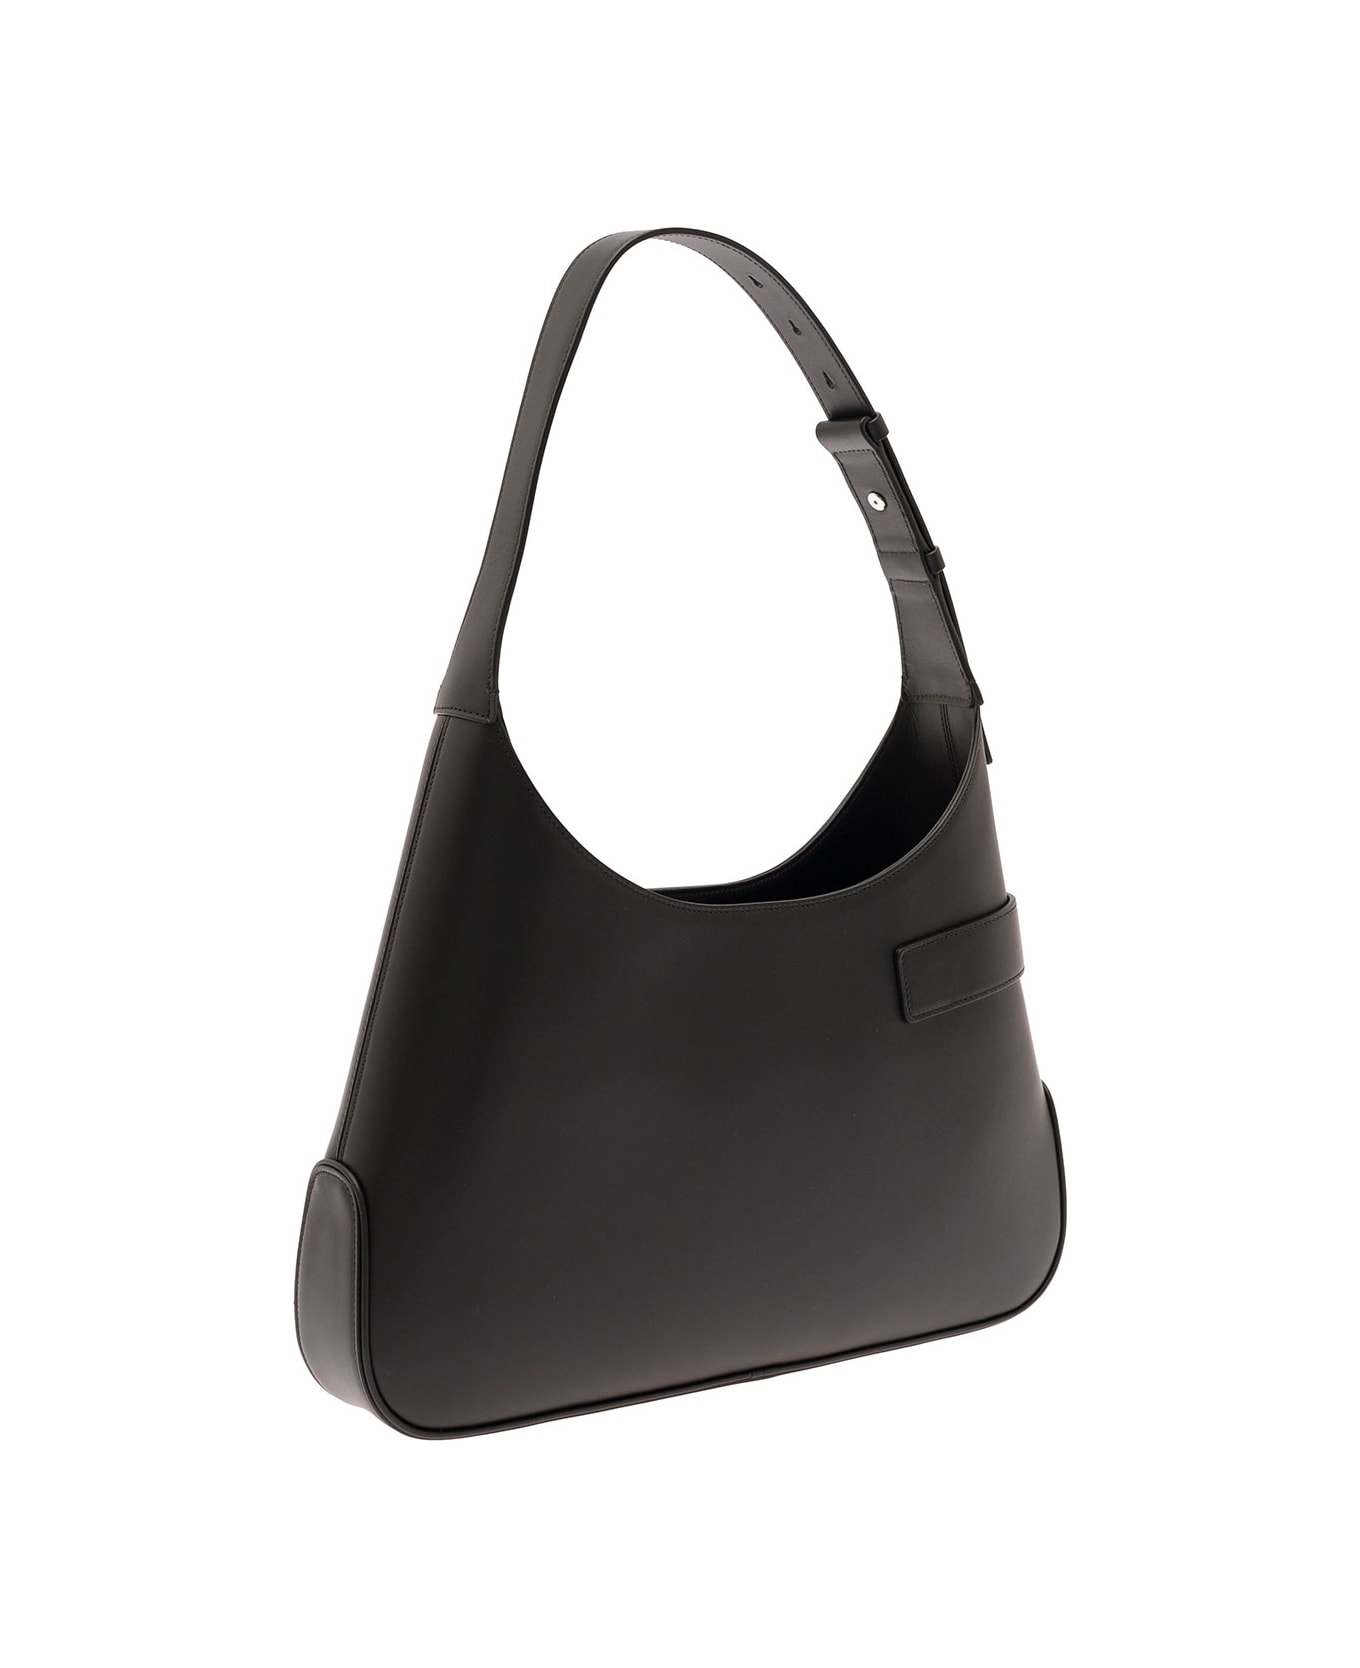 Ferragamo Black Hobo Shoulder Bag With Asymmetric Pocket And Gancini Buckle In Leather Woman - Black